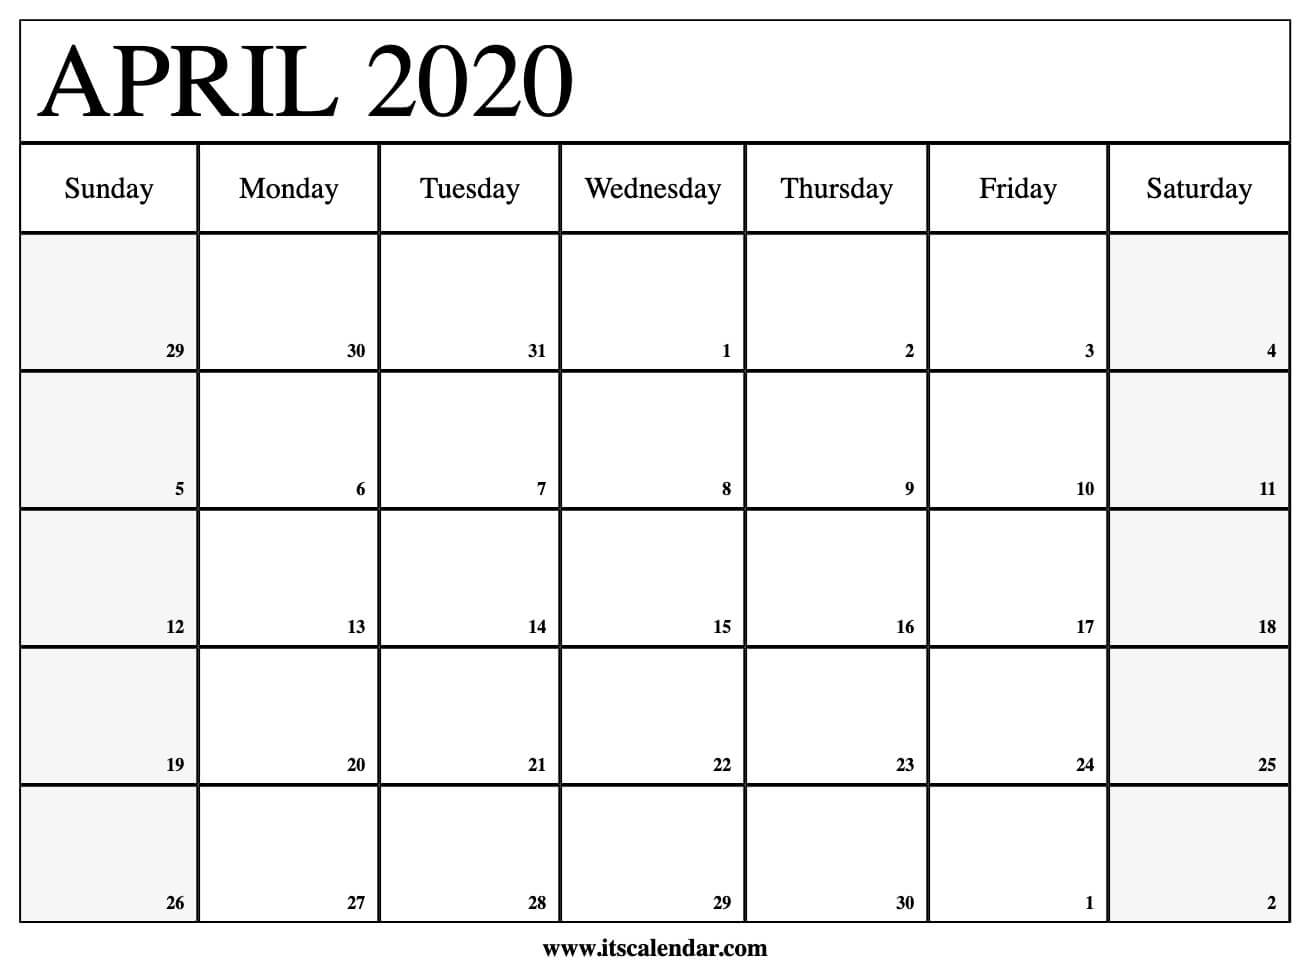 Free Printable April 2020 Calendar1310 x 970